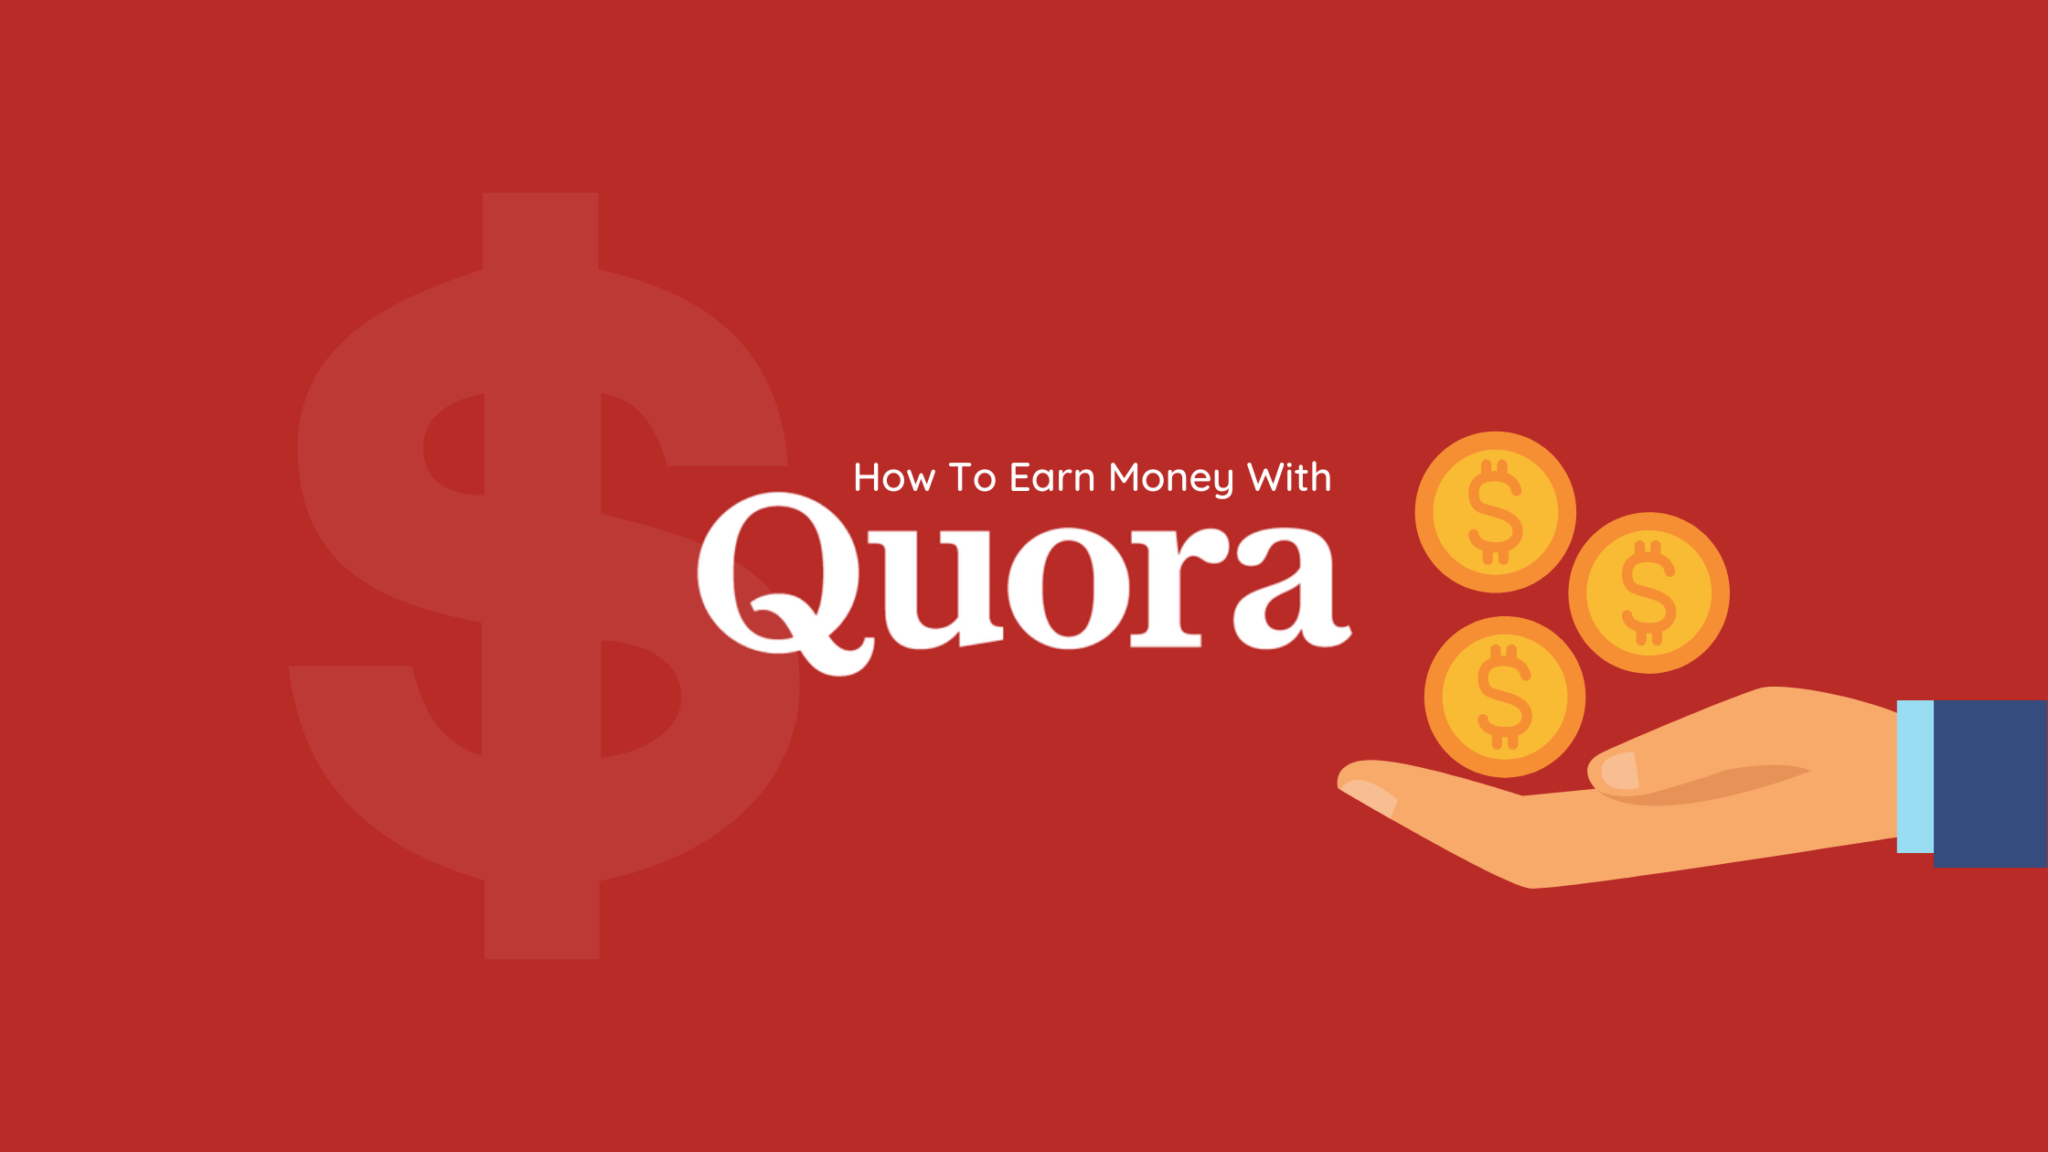 how to earn money online quora india